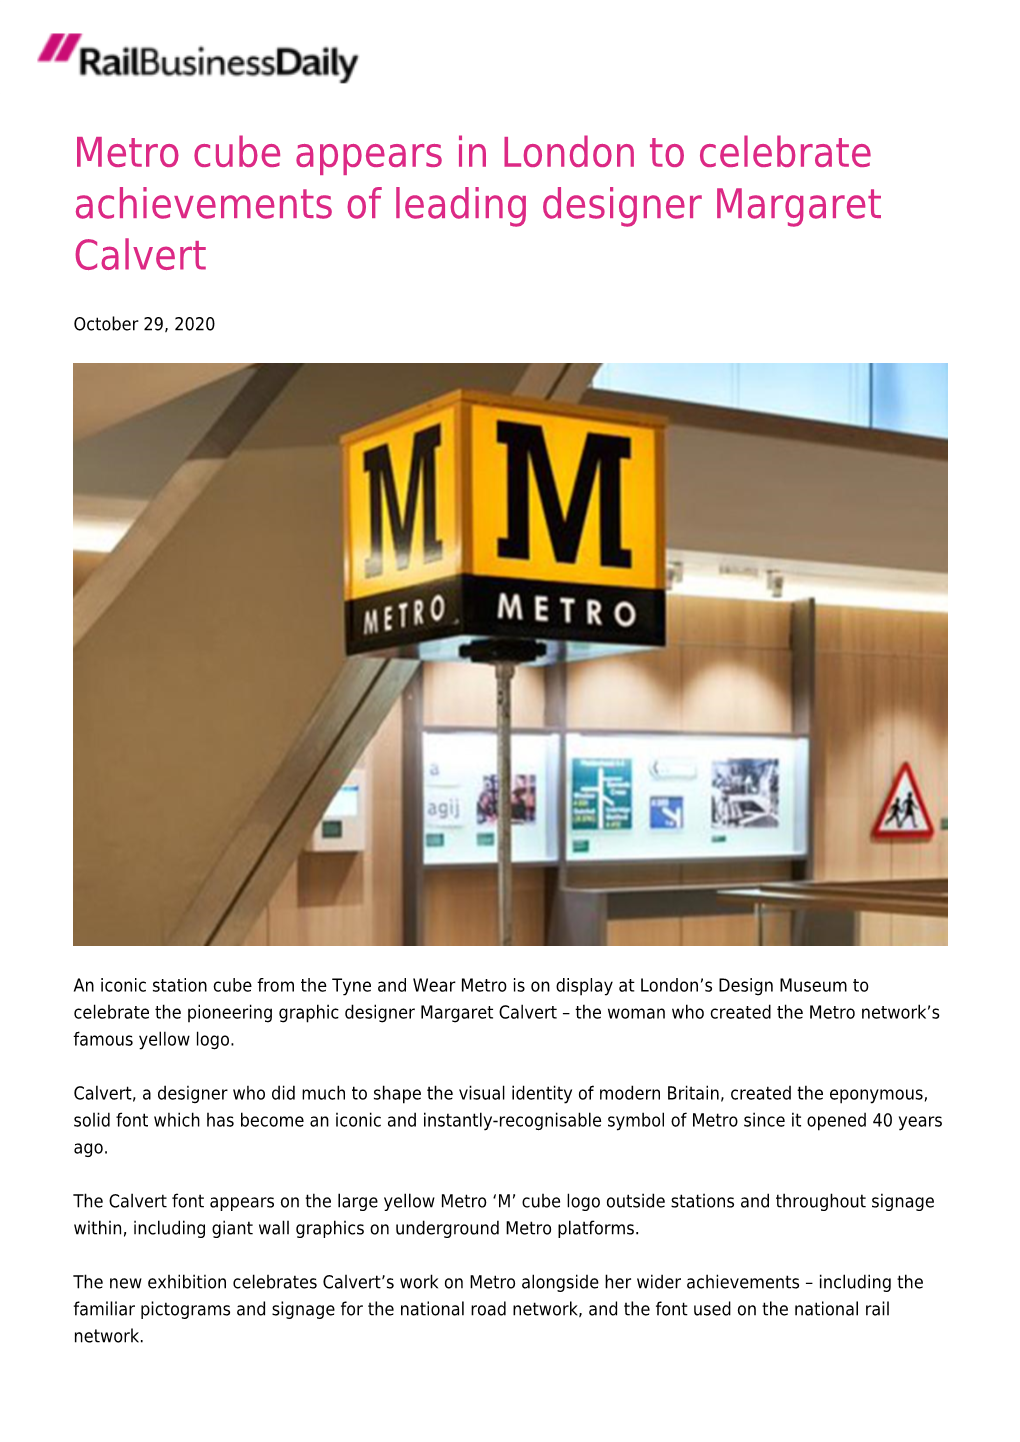 Metro Cube Appears in London to Celebrate Achievements of Leading Designer Margaret Calvert